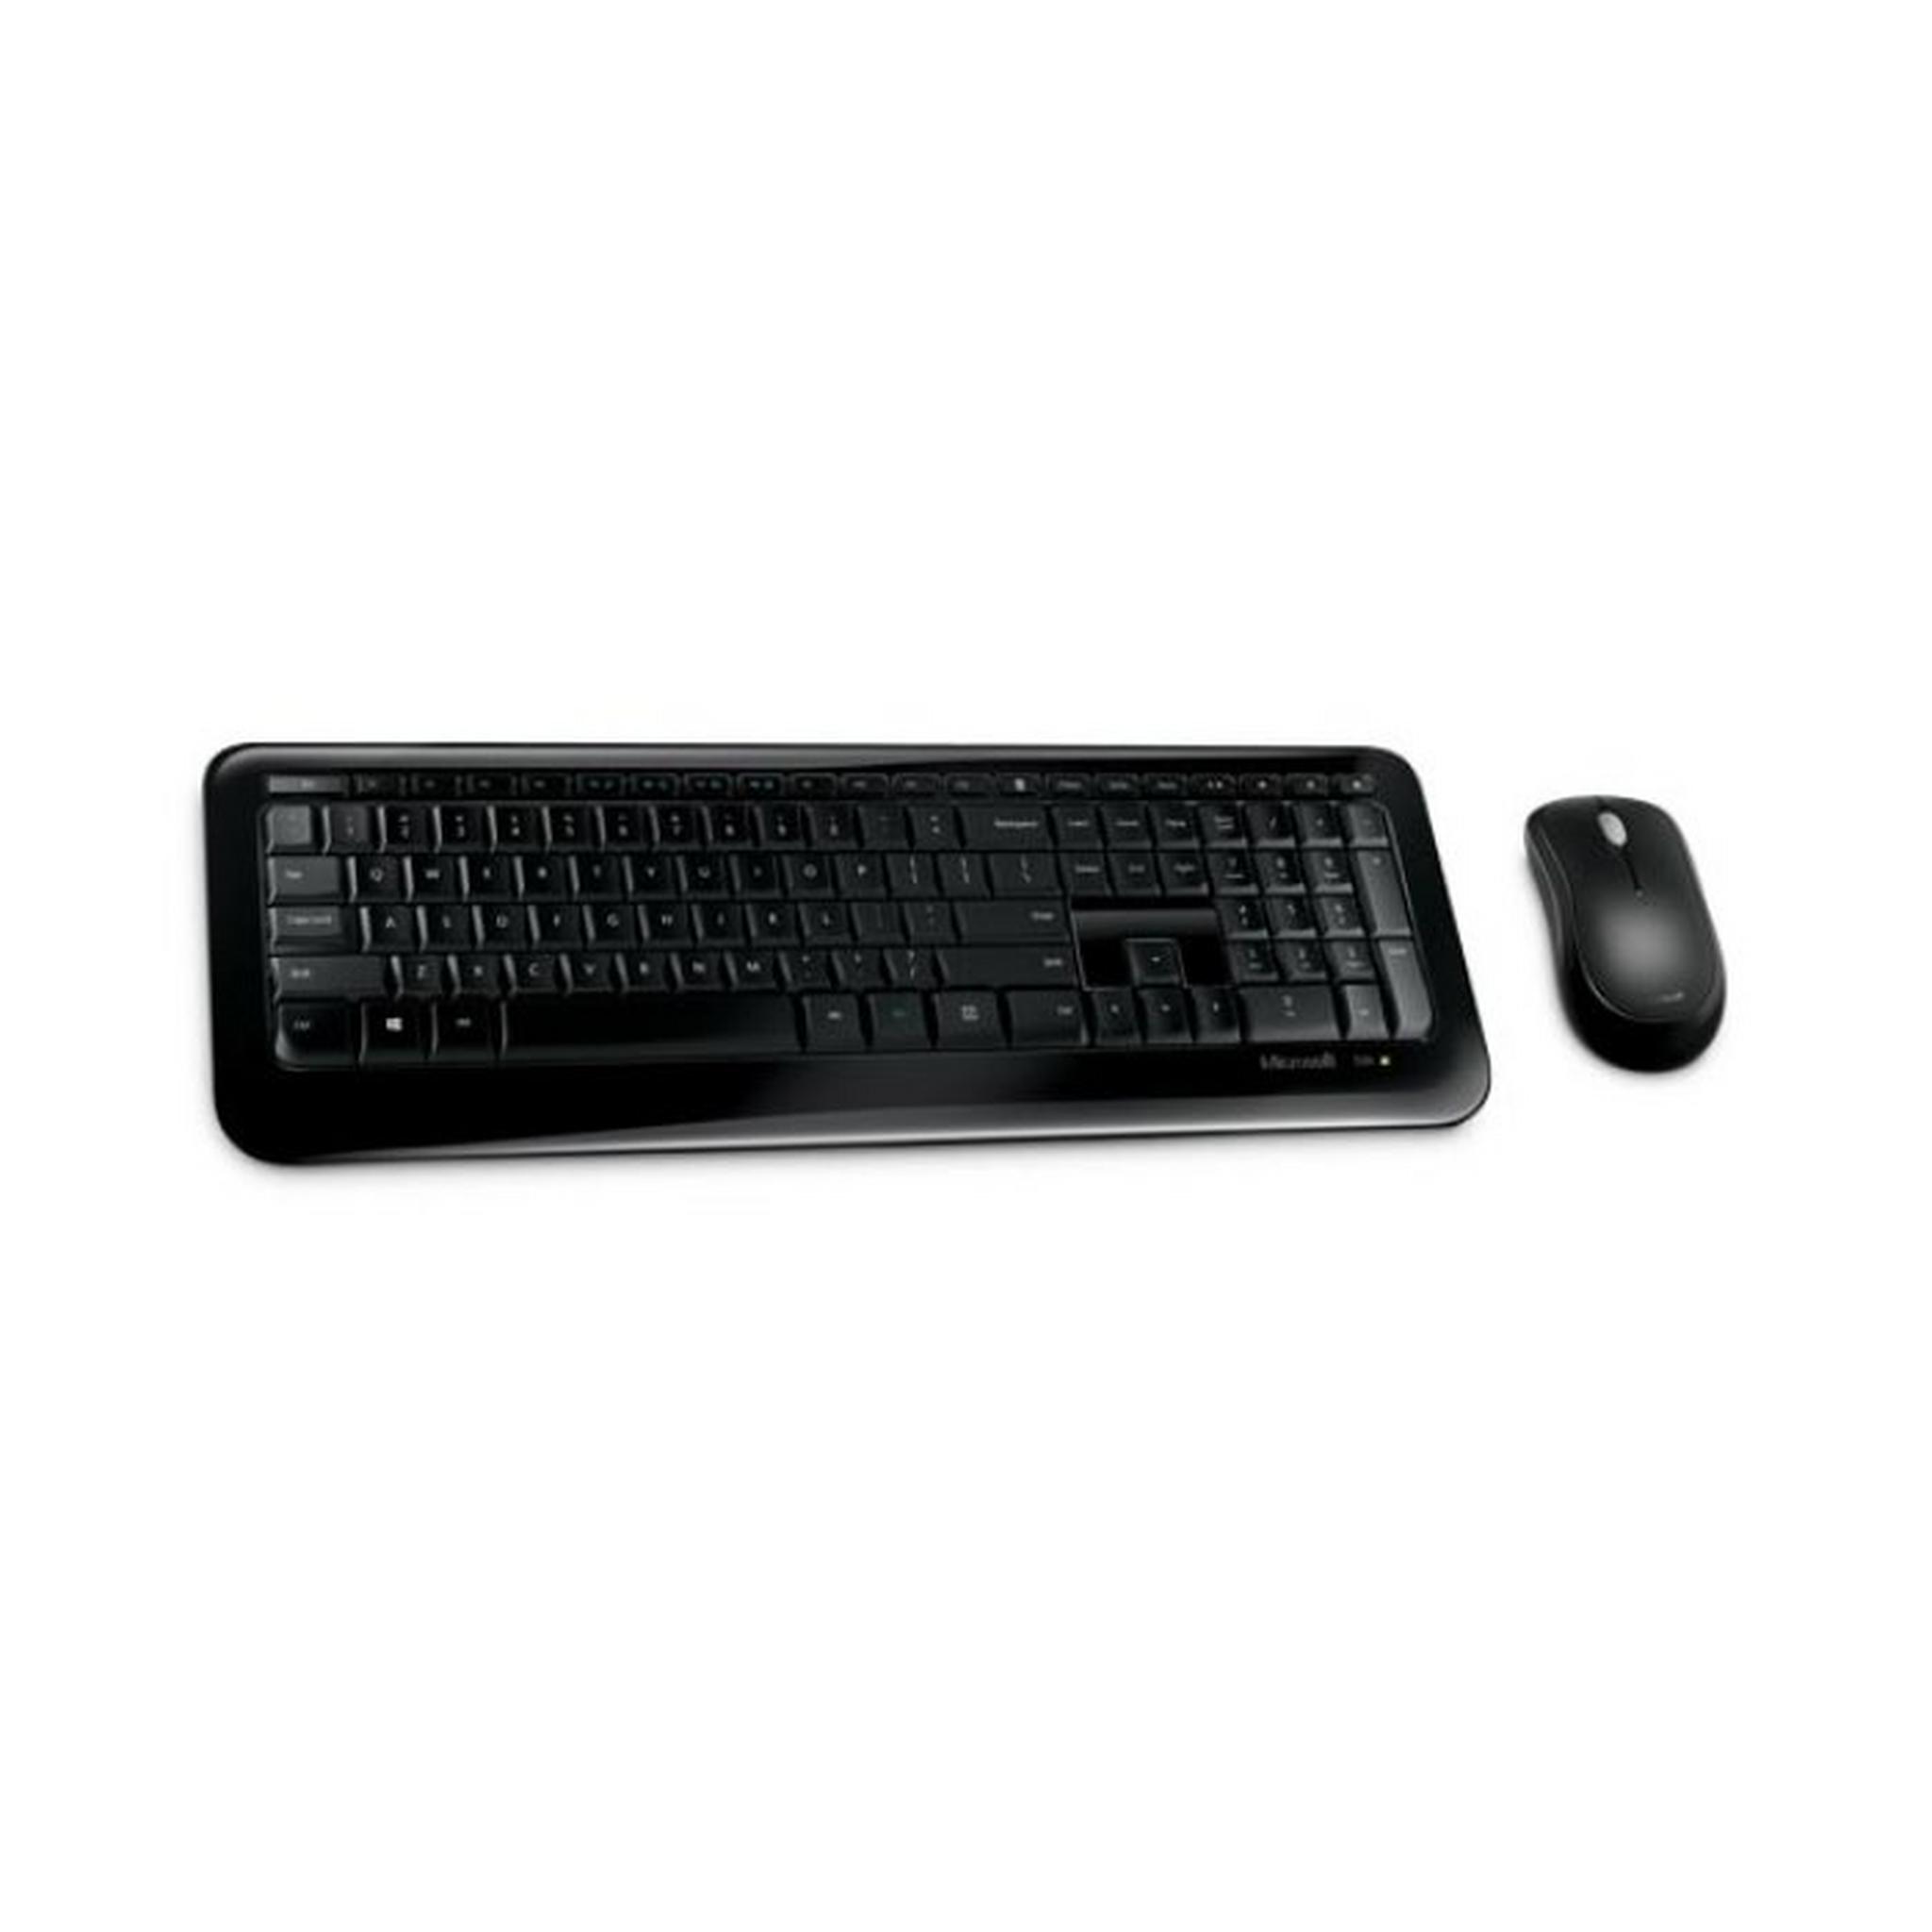 Microsoft Wireless Desktop 850 Keyboard and Mouse (PY9-00020) - Black